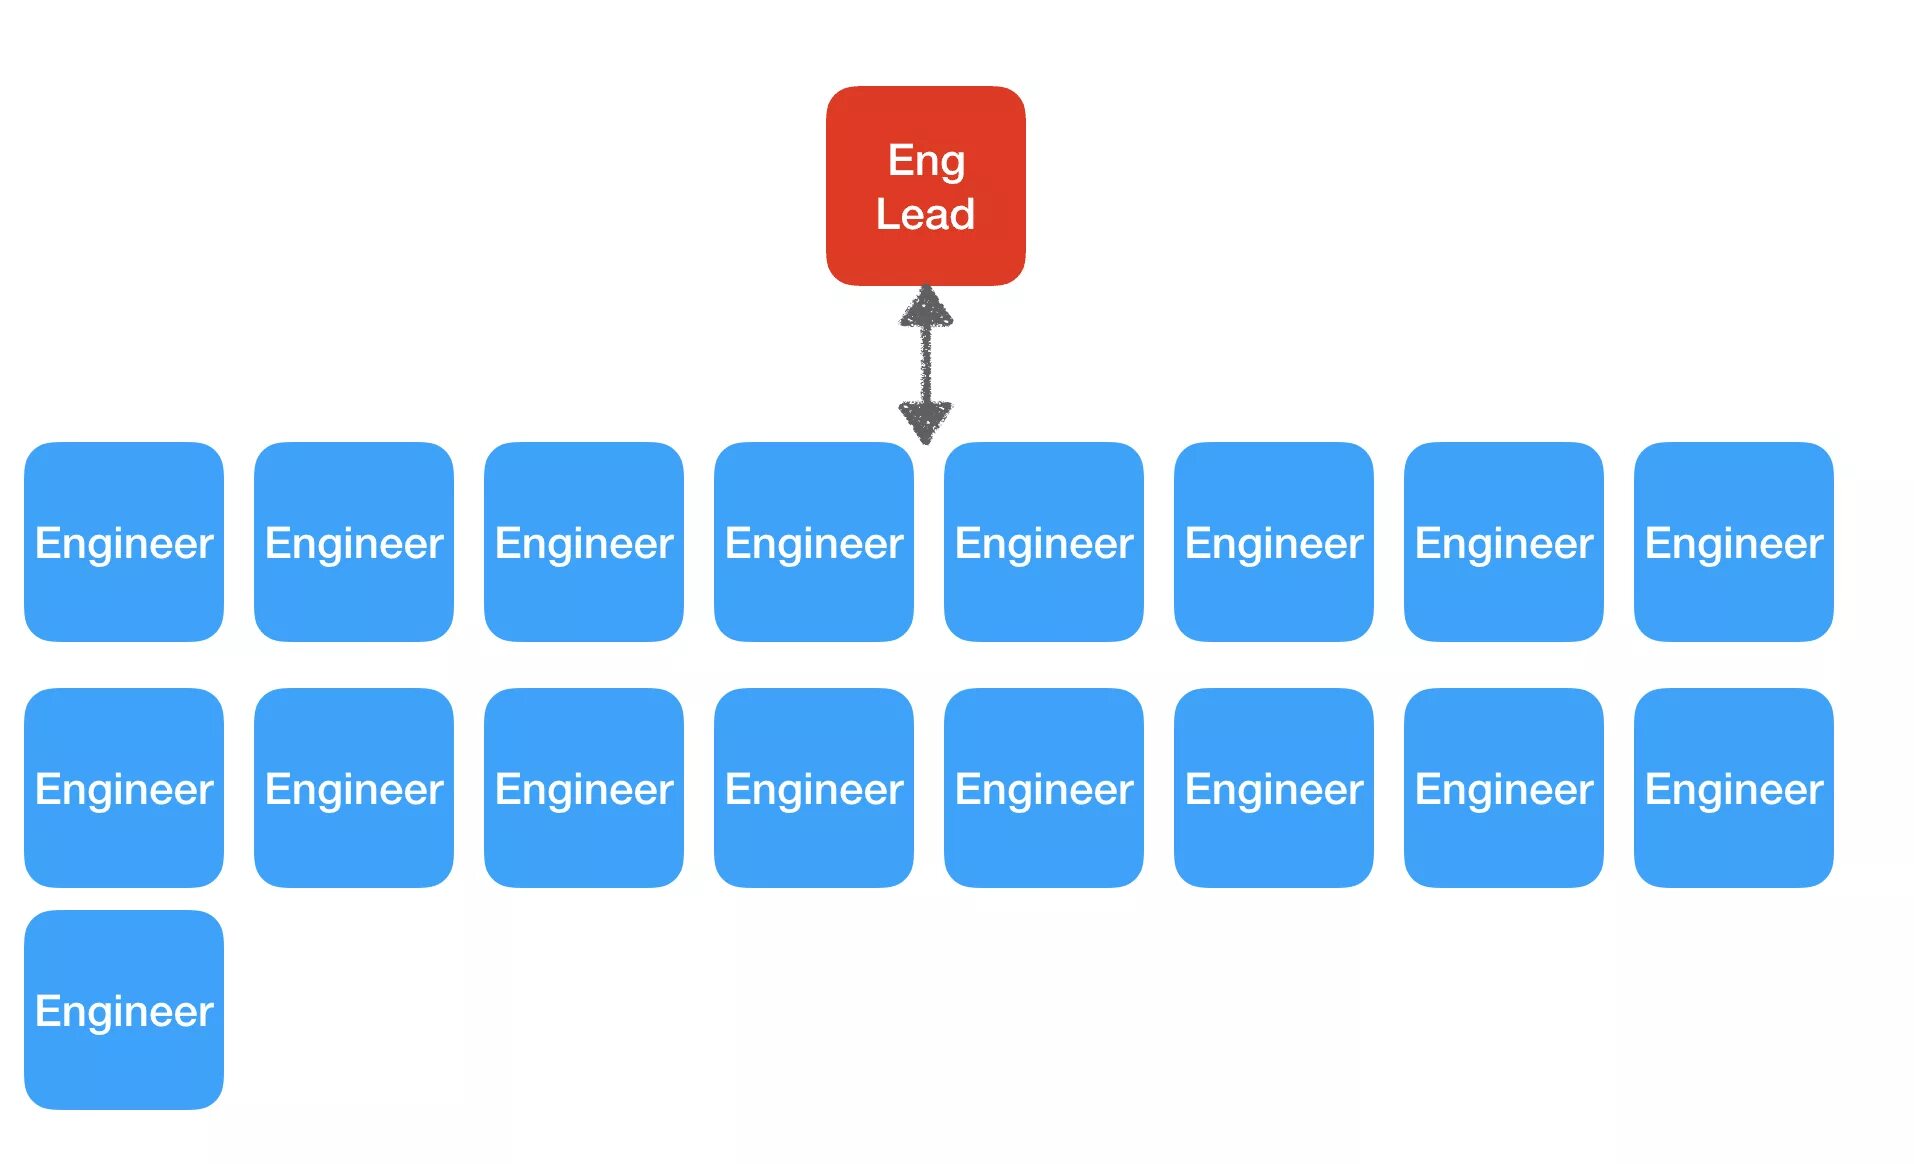 Lead engineering. Lead Engineer. Lead Engineer i&c. Org Chart headcount.